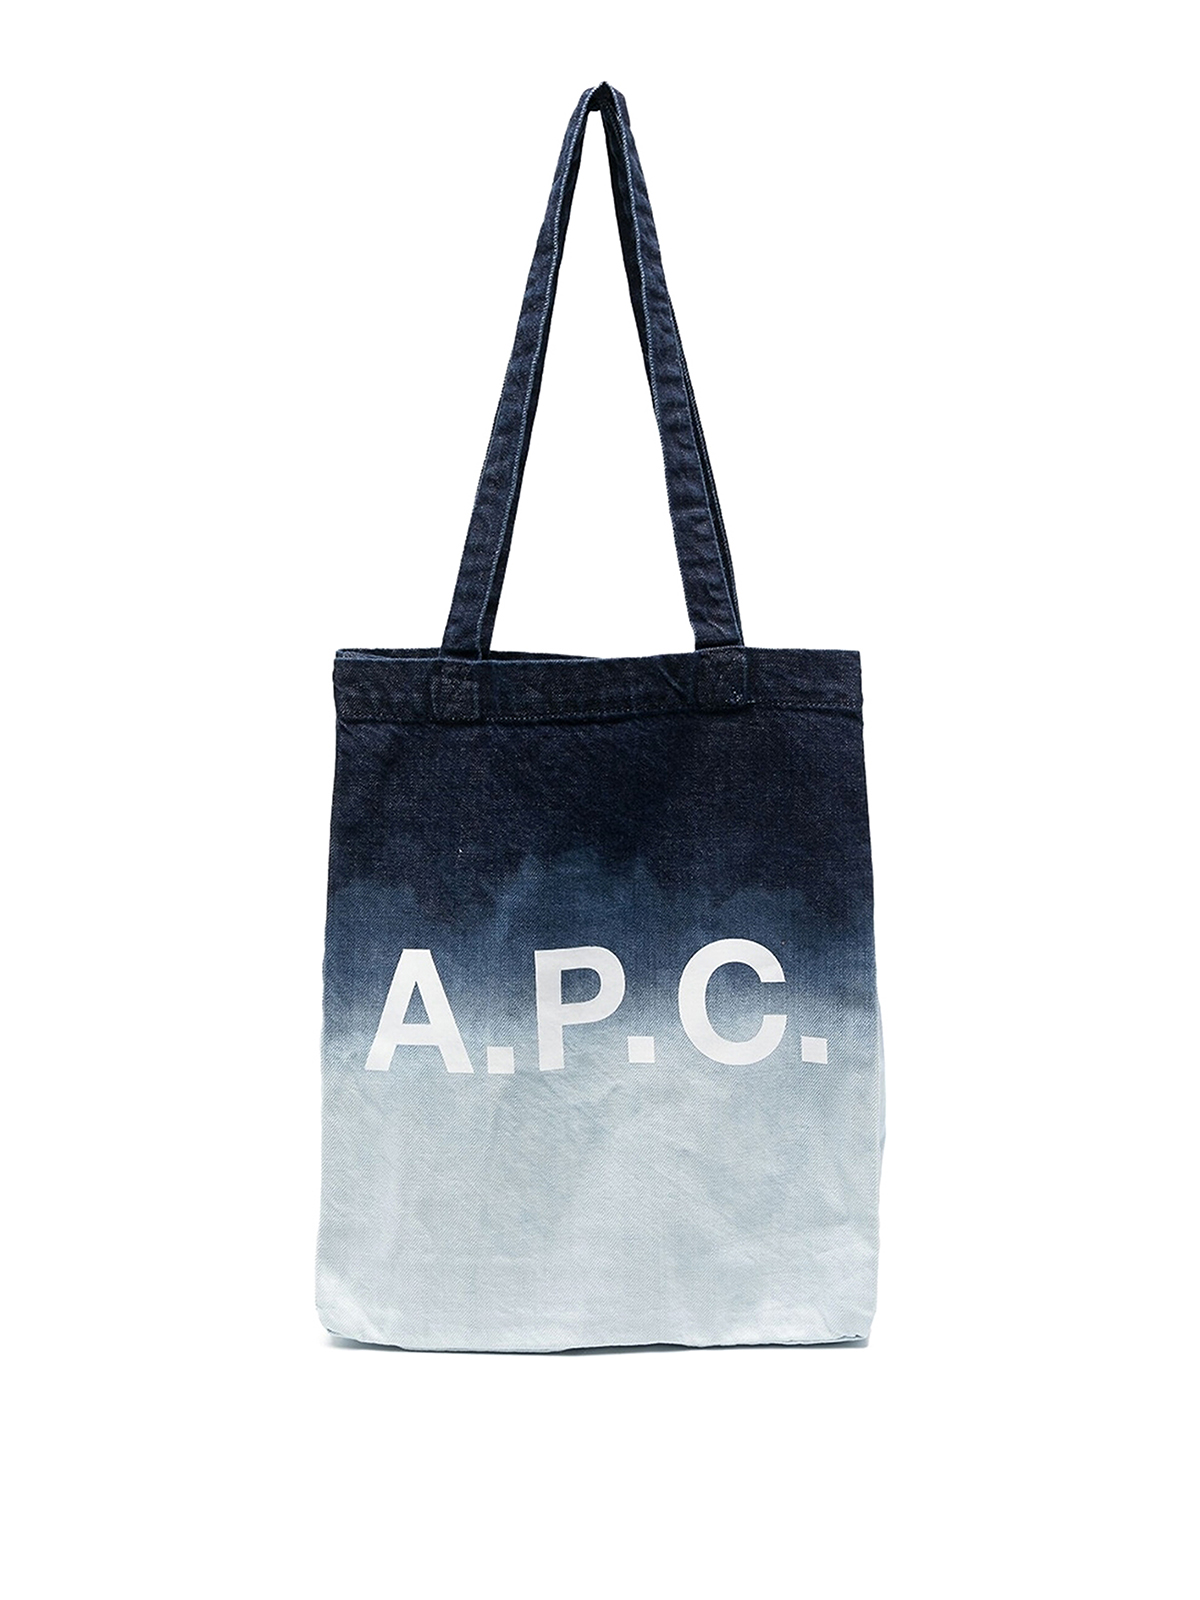 Totes bags A.P.C. - Lou bleached denim tote bag - M61442COFDLAAF